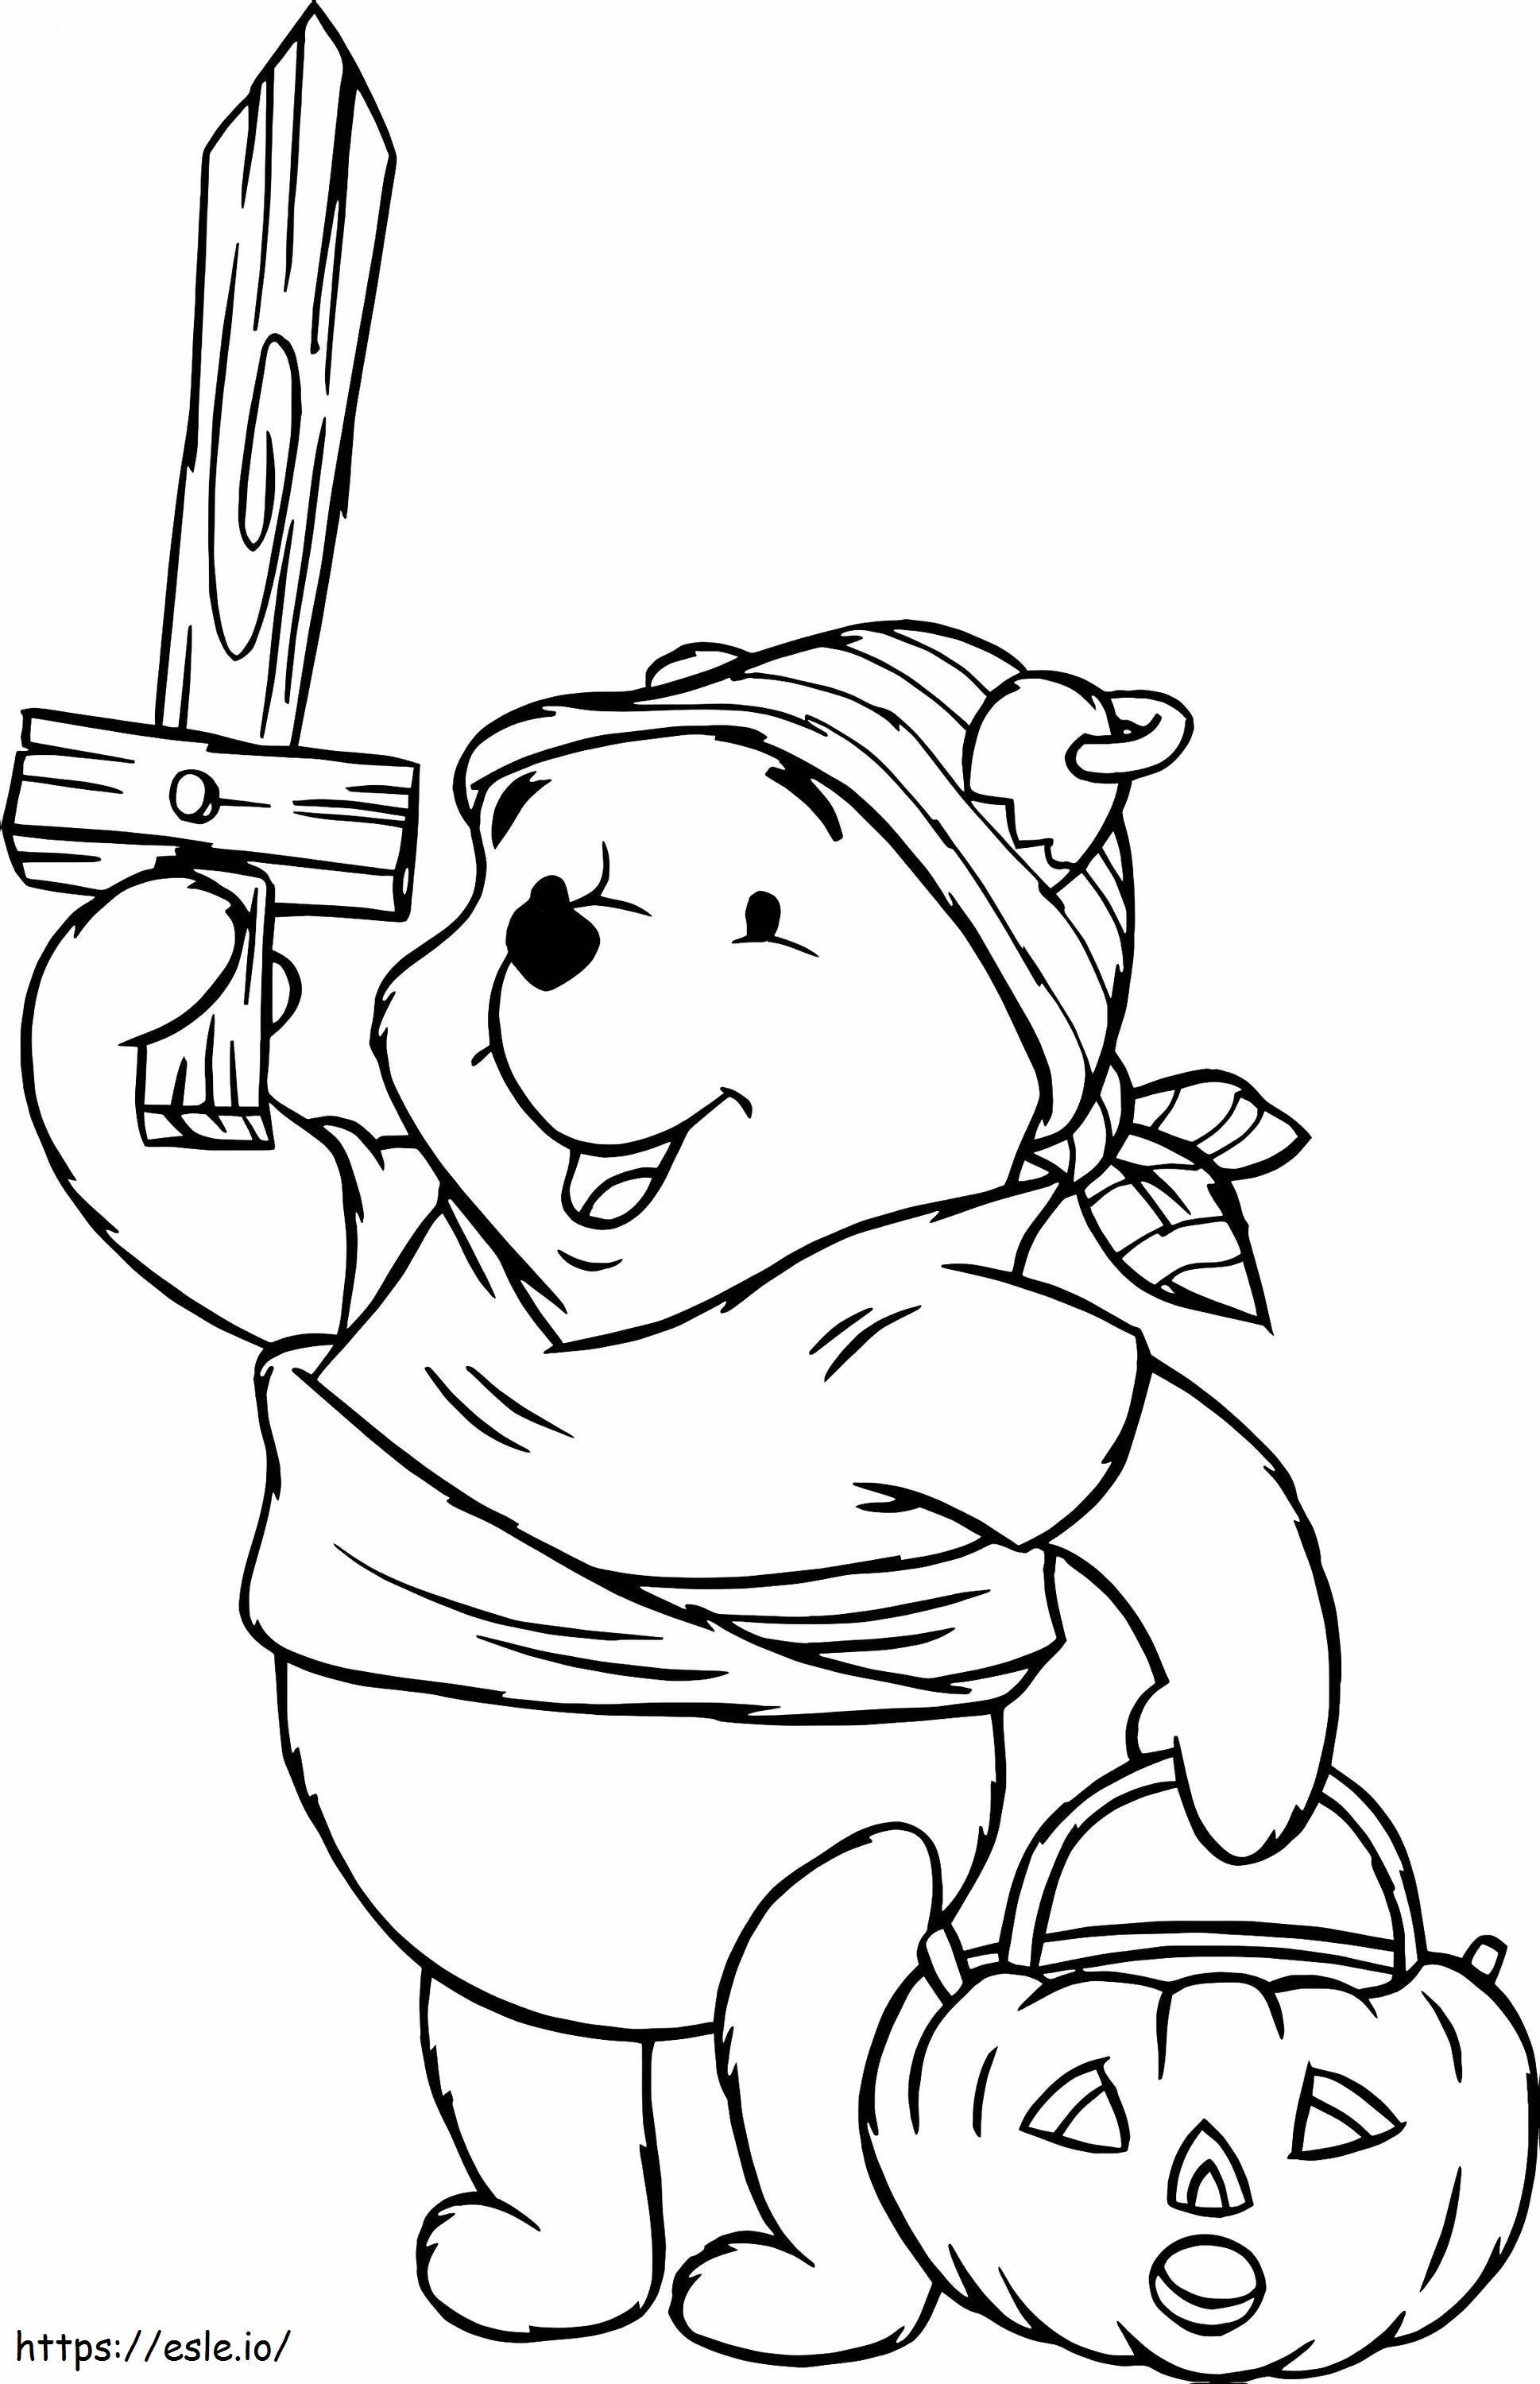 Coloriage Pirate Winnie l'ourson à imprimer dessin